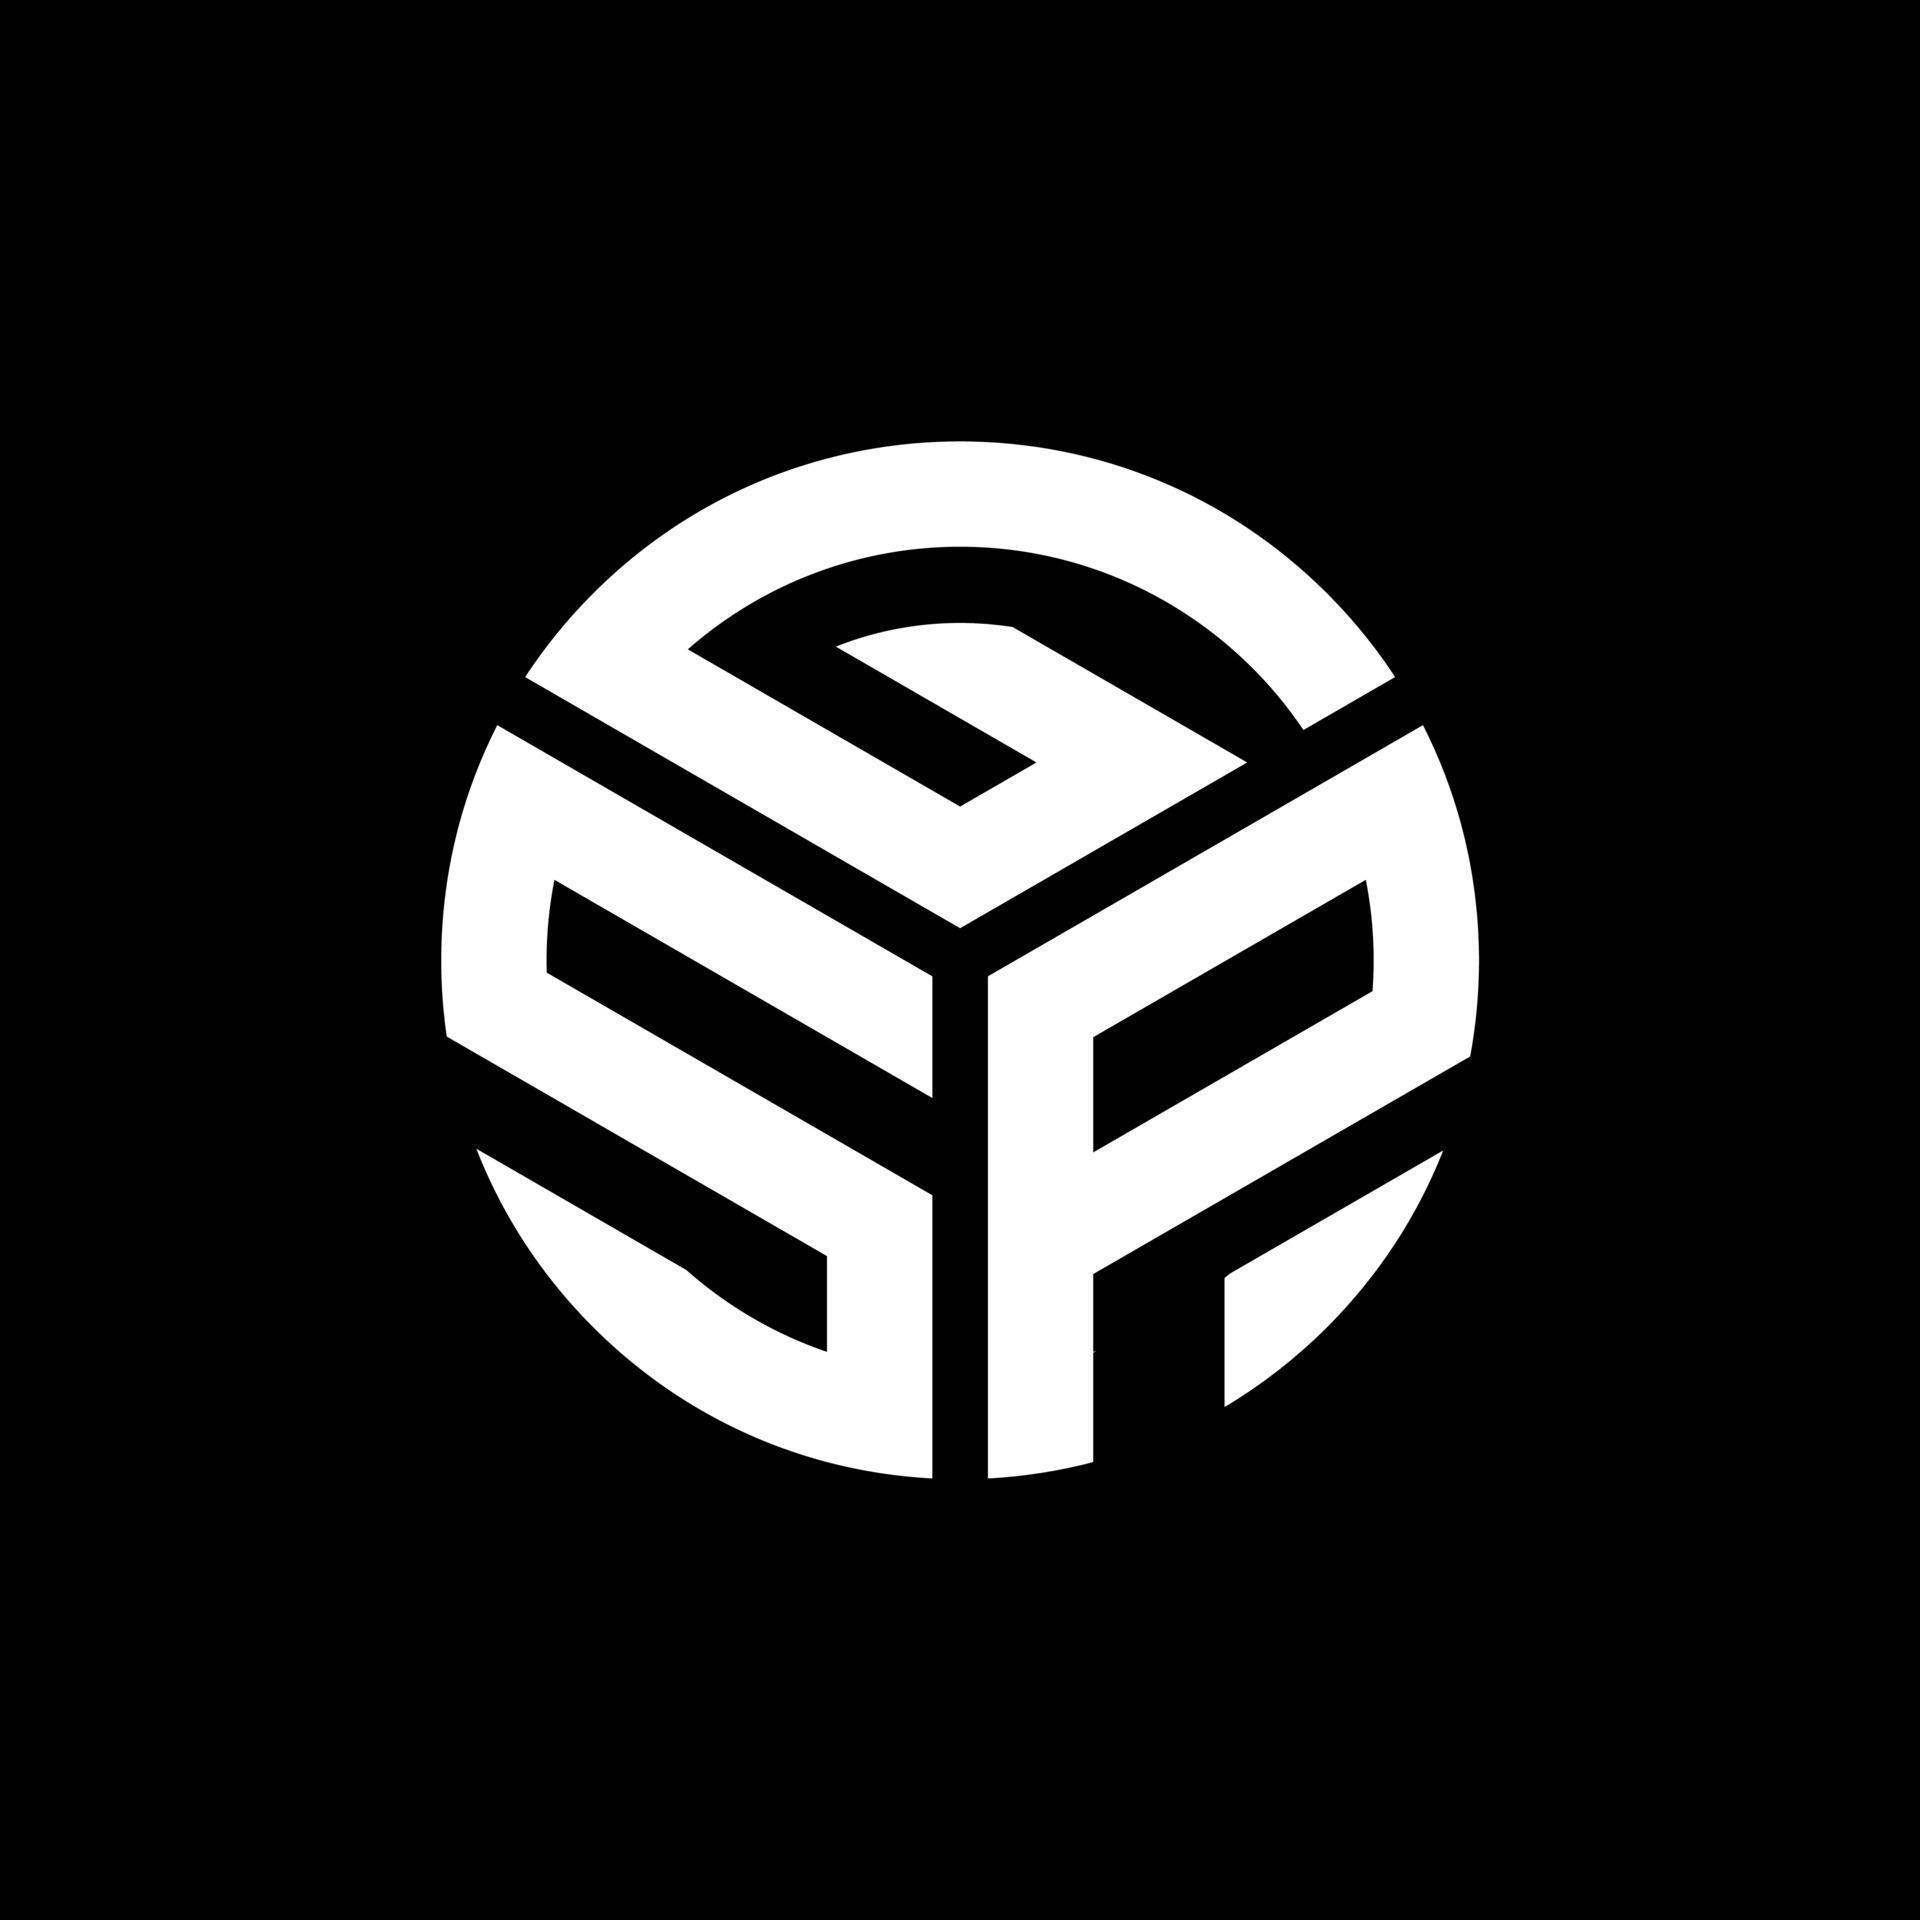 gsp brief logo ontwerp op zwarte achtergrond. gsp creatieve initialen brief logo concept. gsp brief ontwerp. vector